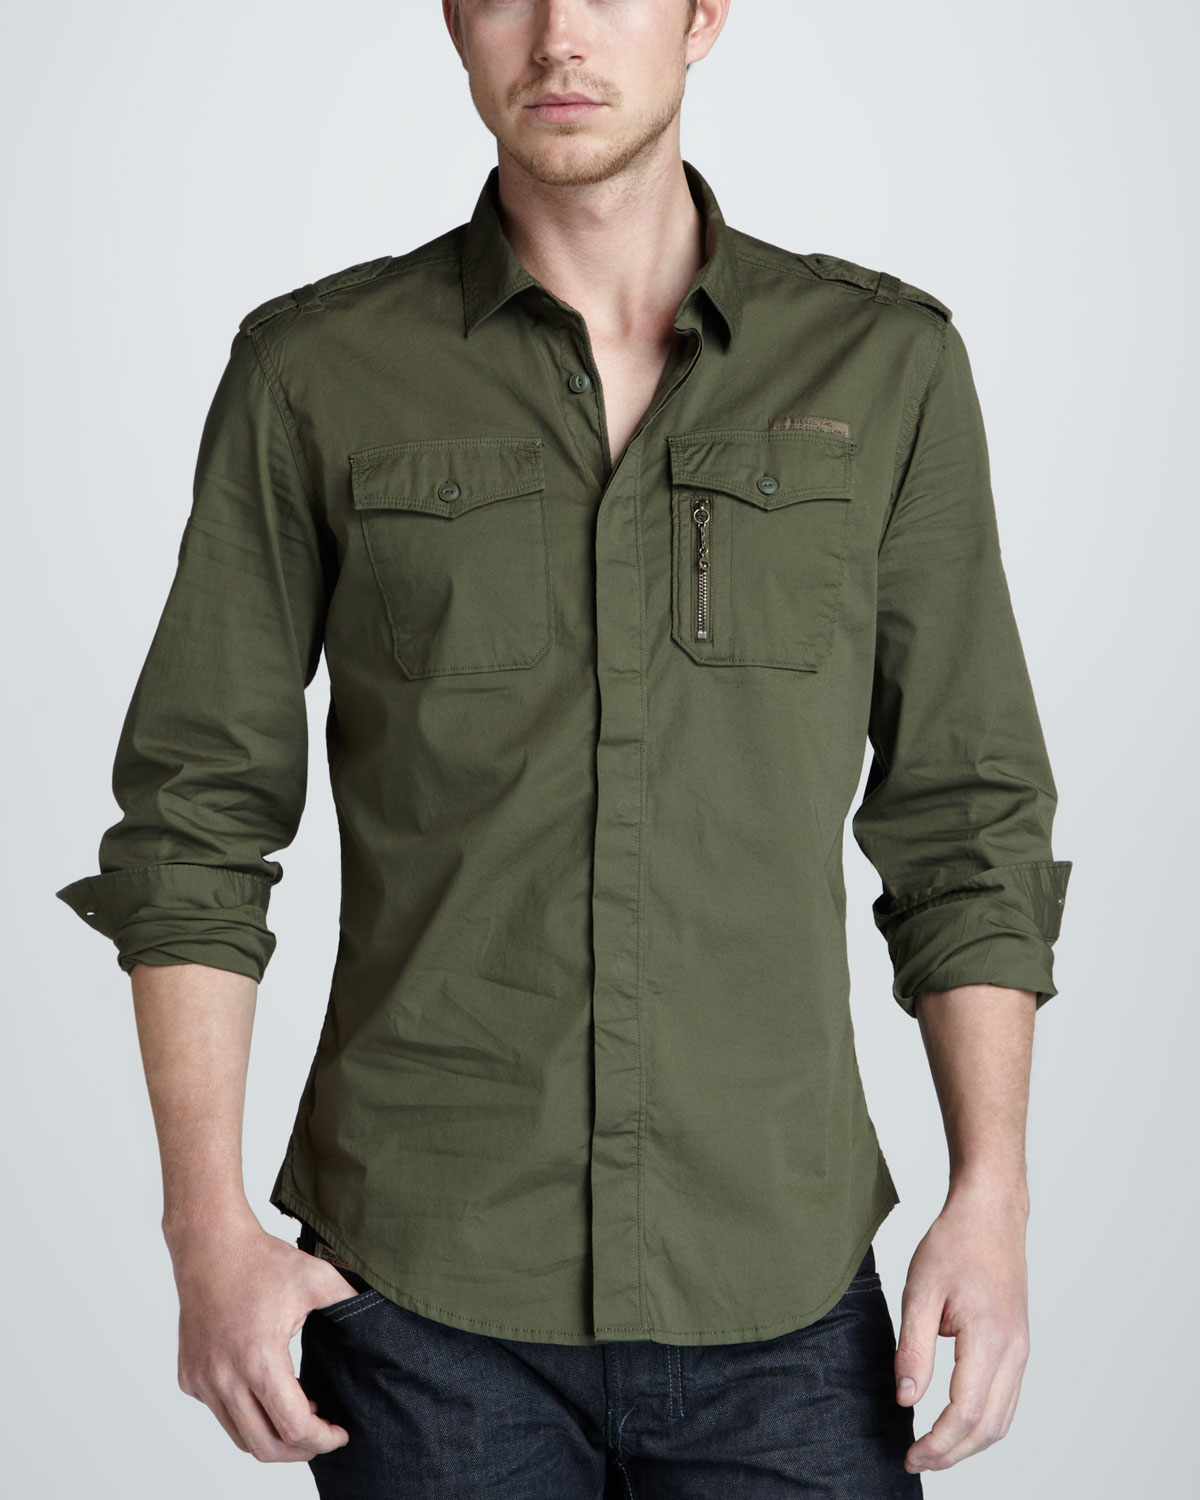 Lyst - Diesel Military Shirt in Green for Men